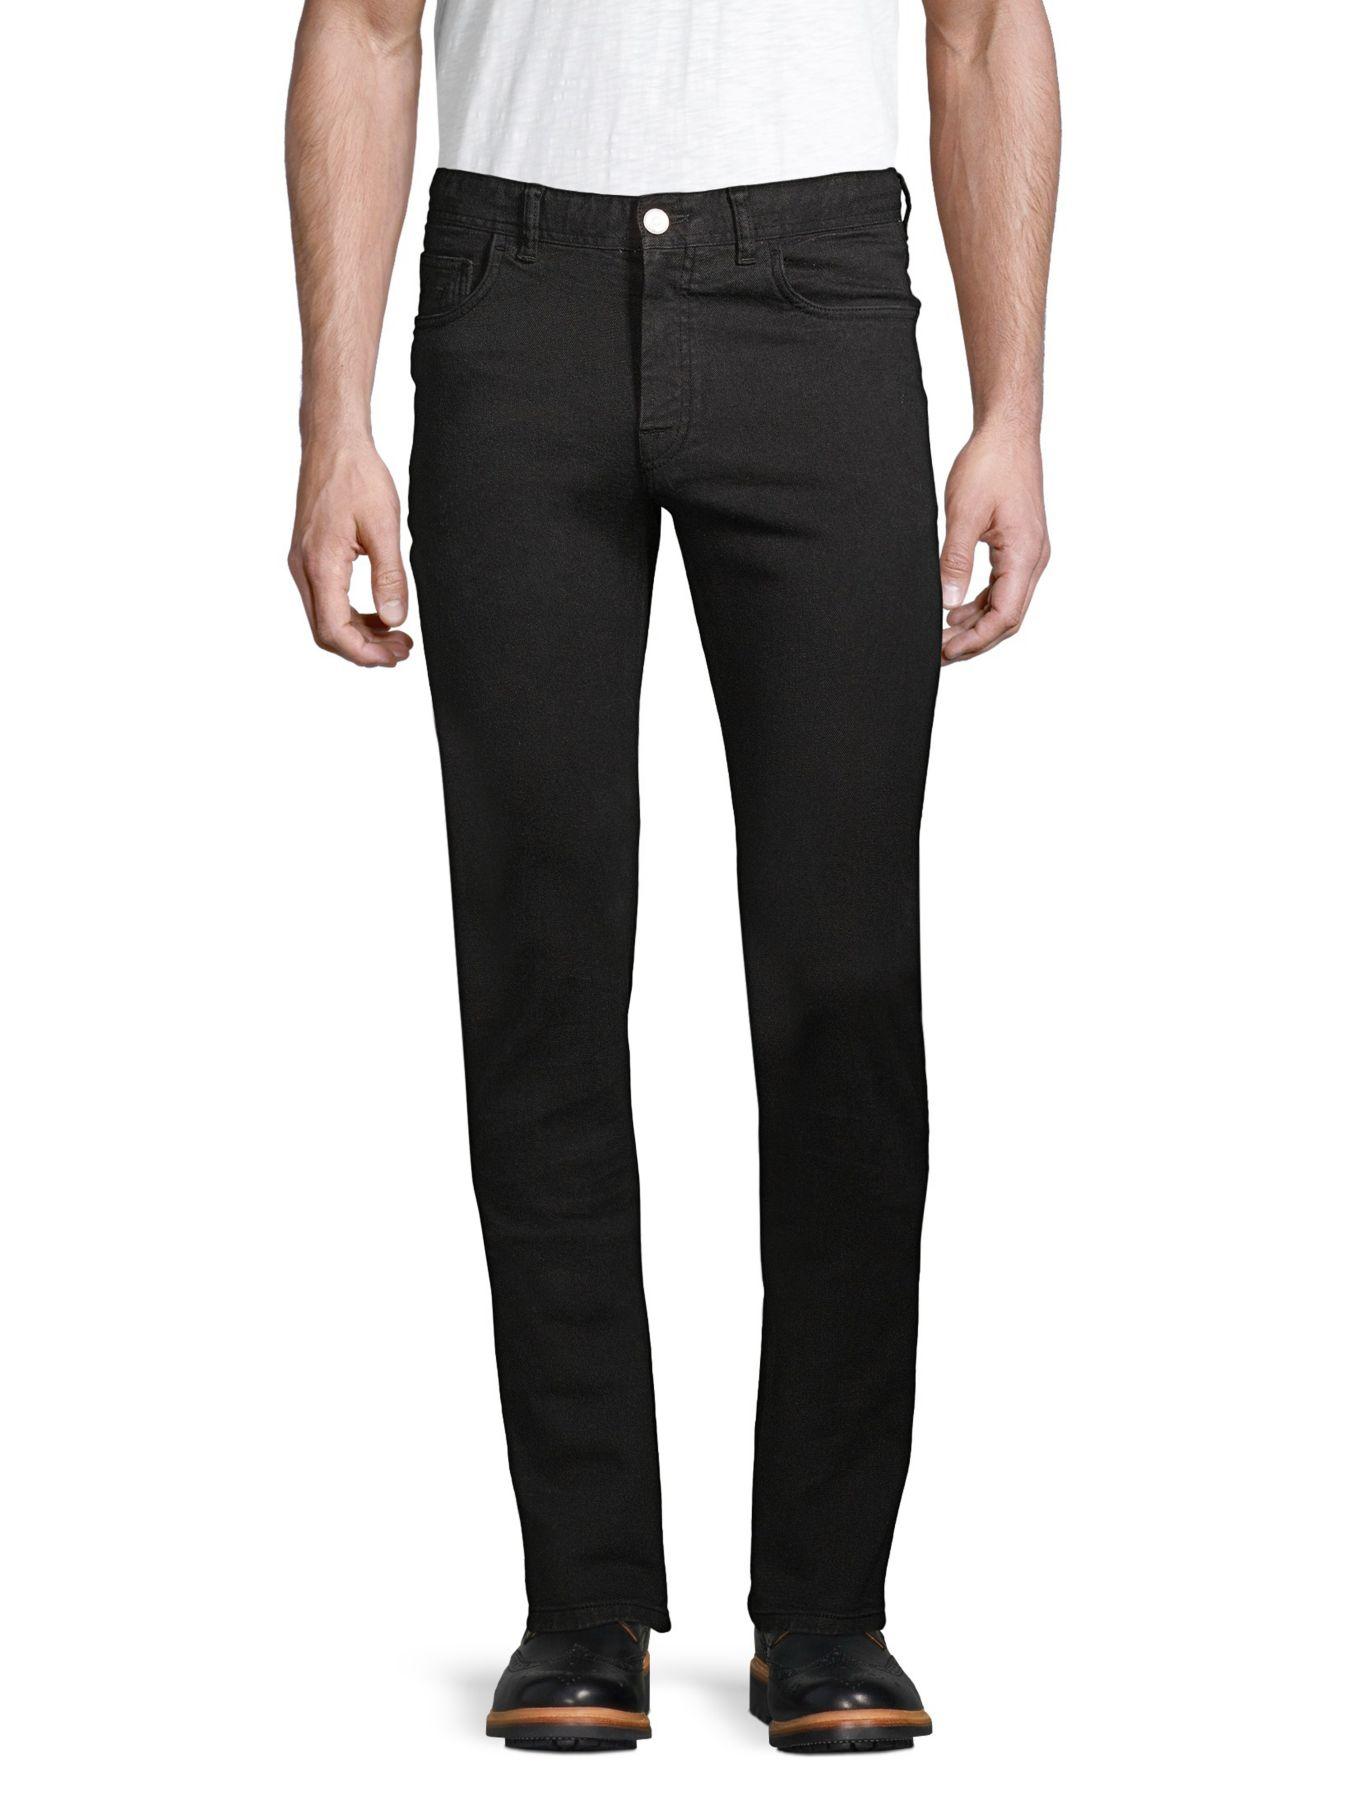 Brioni Denim Slim-fit Straight Jeans in Black for Men - Lyst